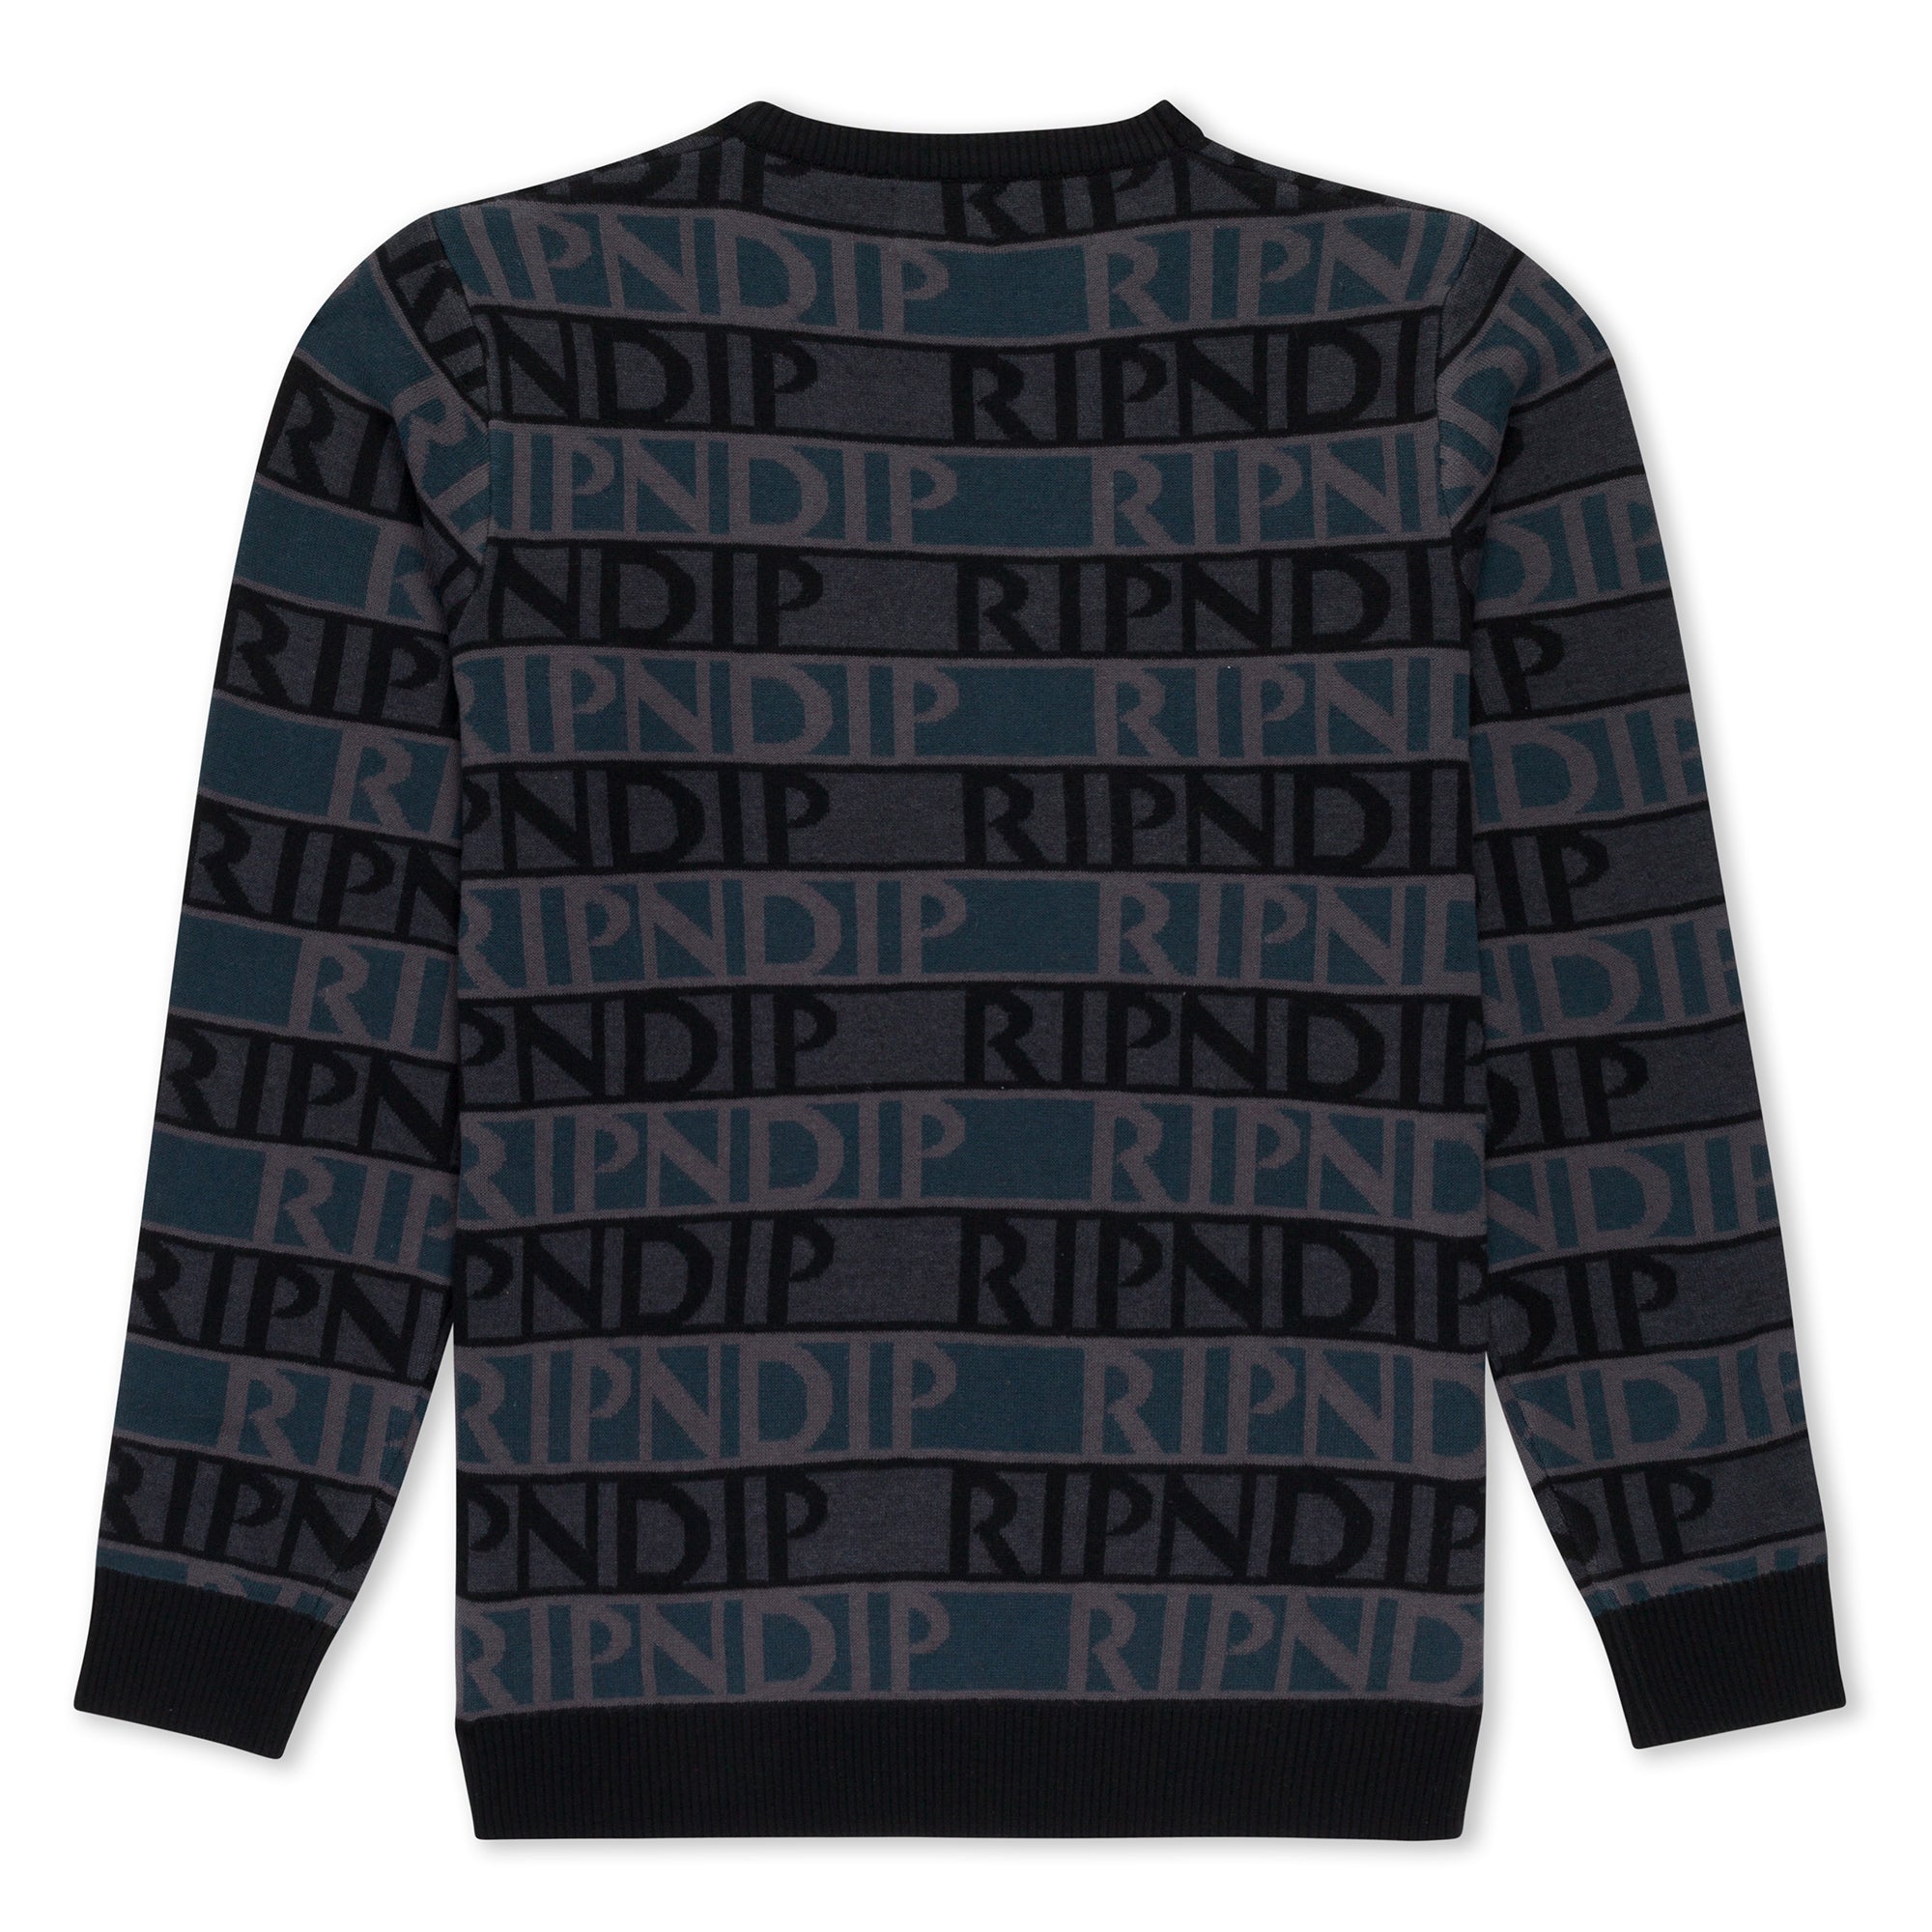 Highland Knit Sweater (Black)